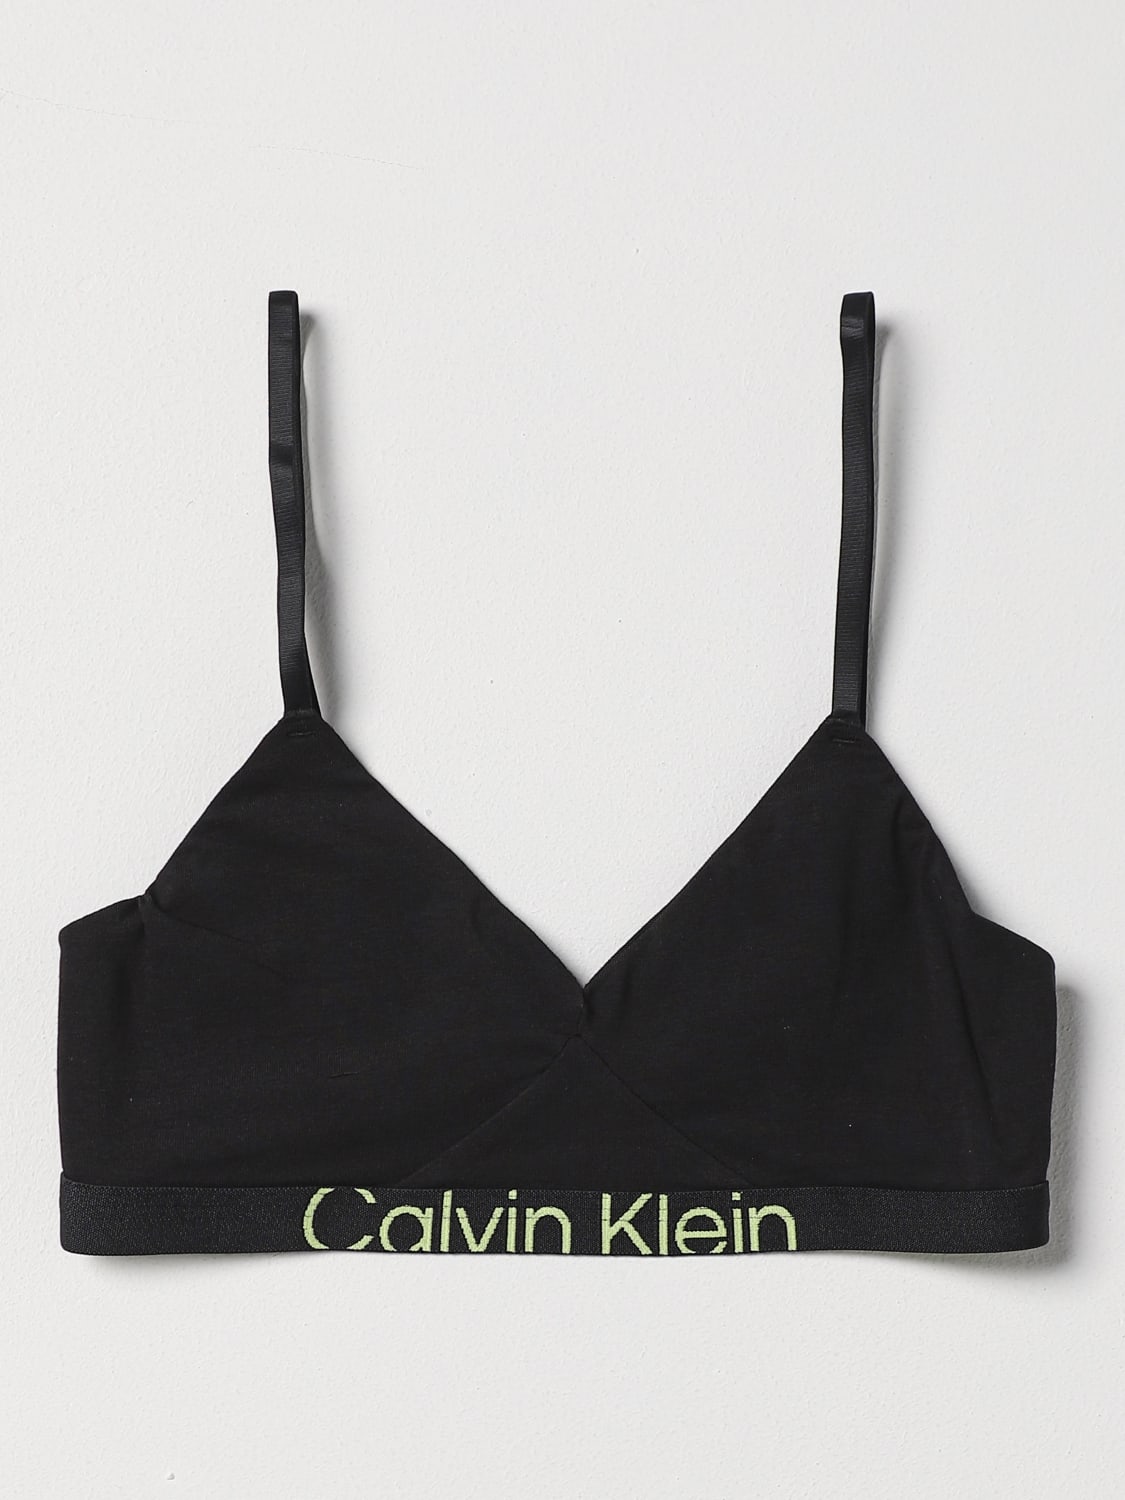 KLEIN Underwear lingerie Black UNDERWEAR: Klein 000QF7398E woman Calvin at online CALVIN for lingerie - |